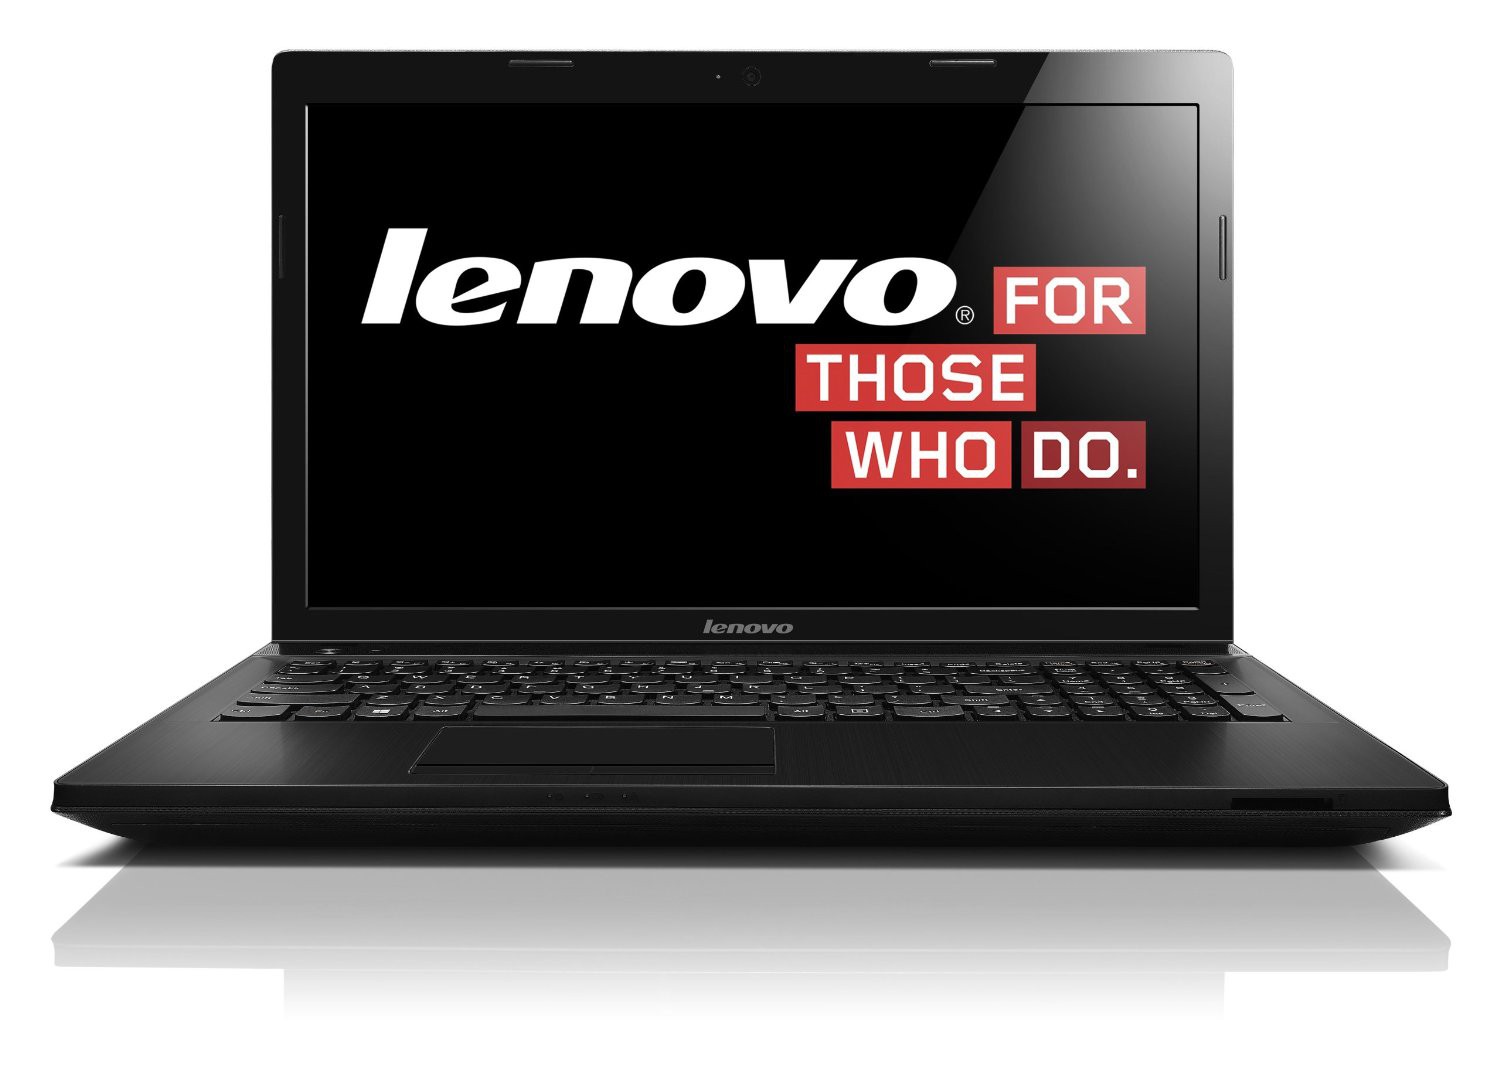 Lenovo G5080 core i3 4Gb ram 500GB Hard disk 15.6 inch LED